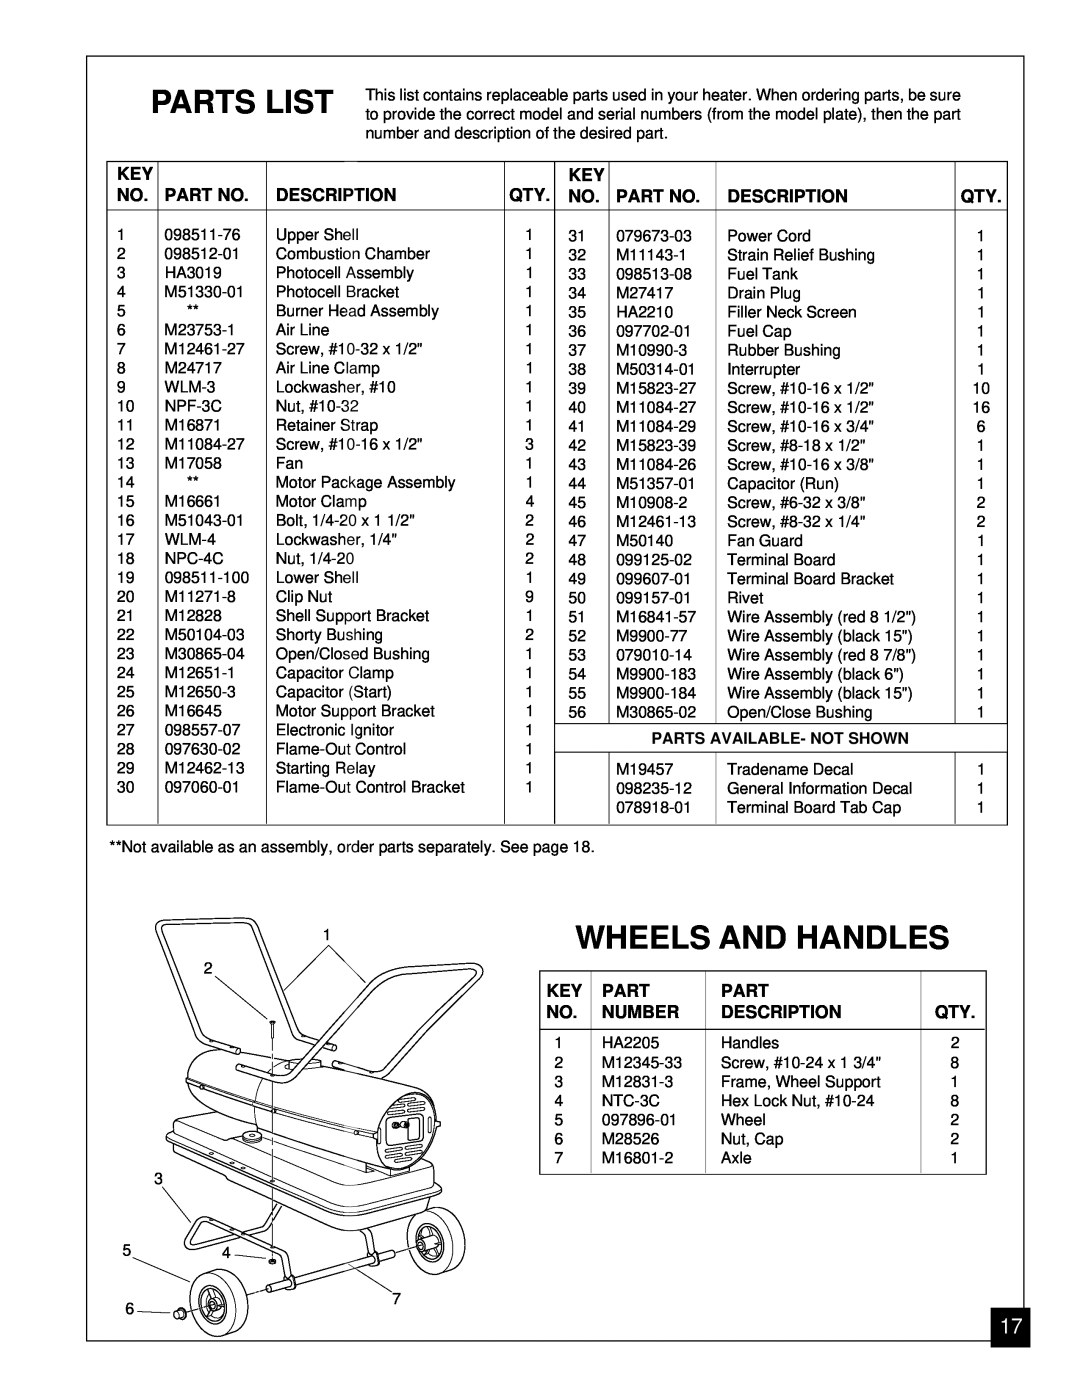 Desa RV125EDI owner manual Parts List, Wheels And Handles, Description, Number 